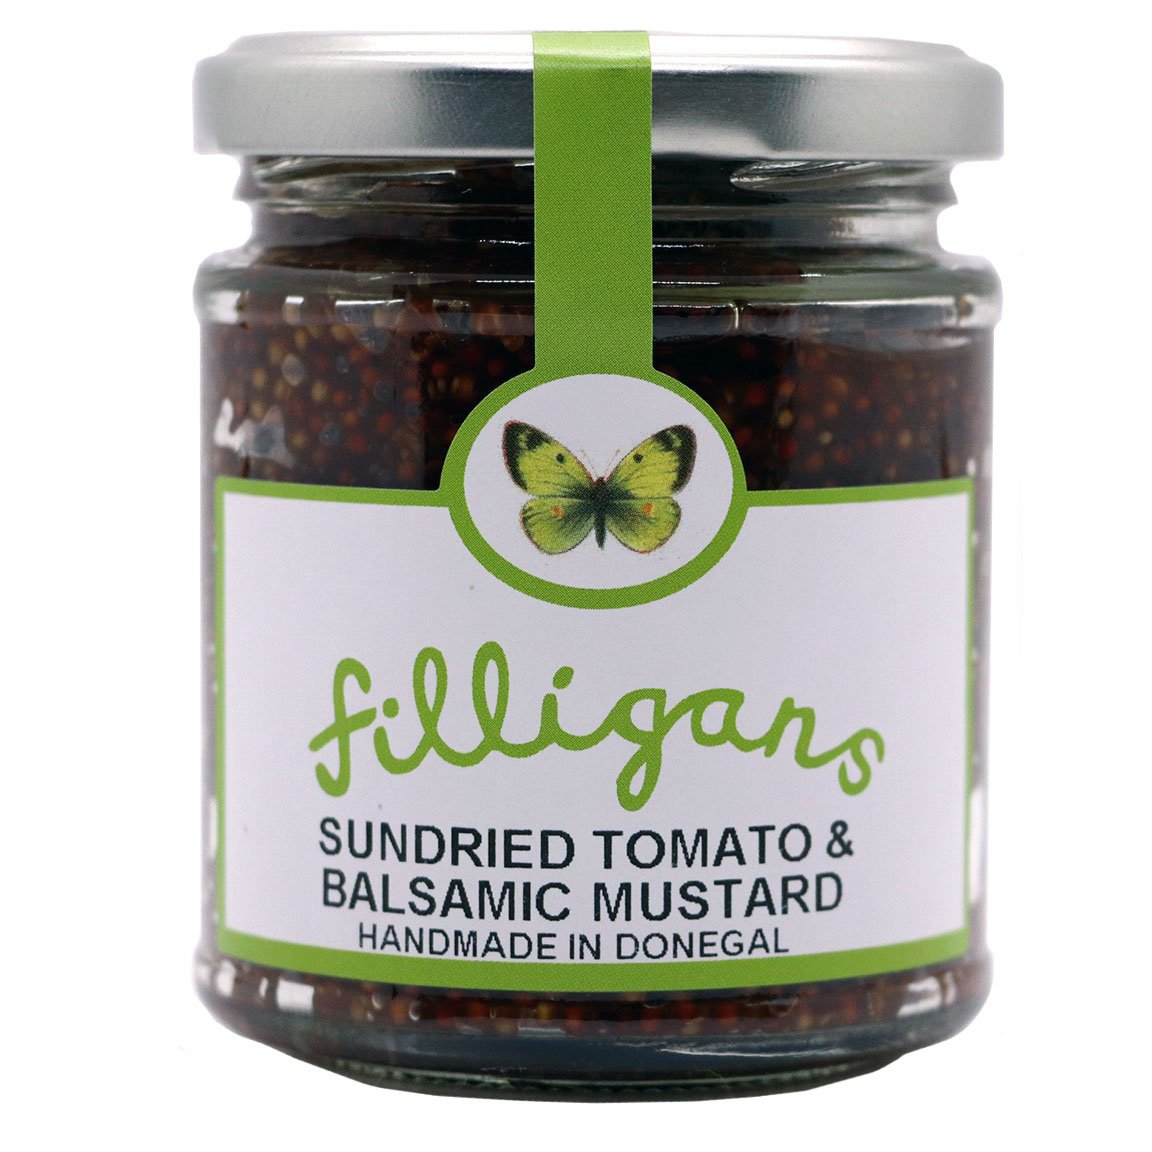 Filligans Sundried Tomato with Balsamic Vinegar Mustard